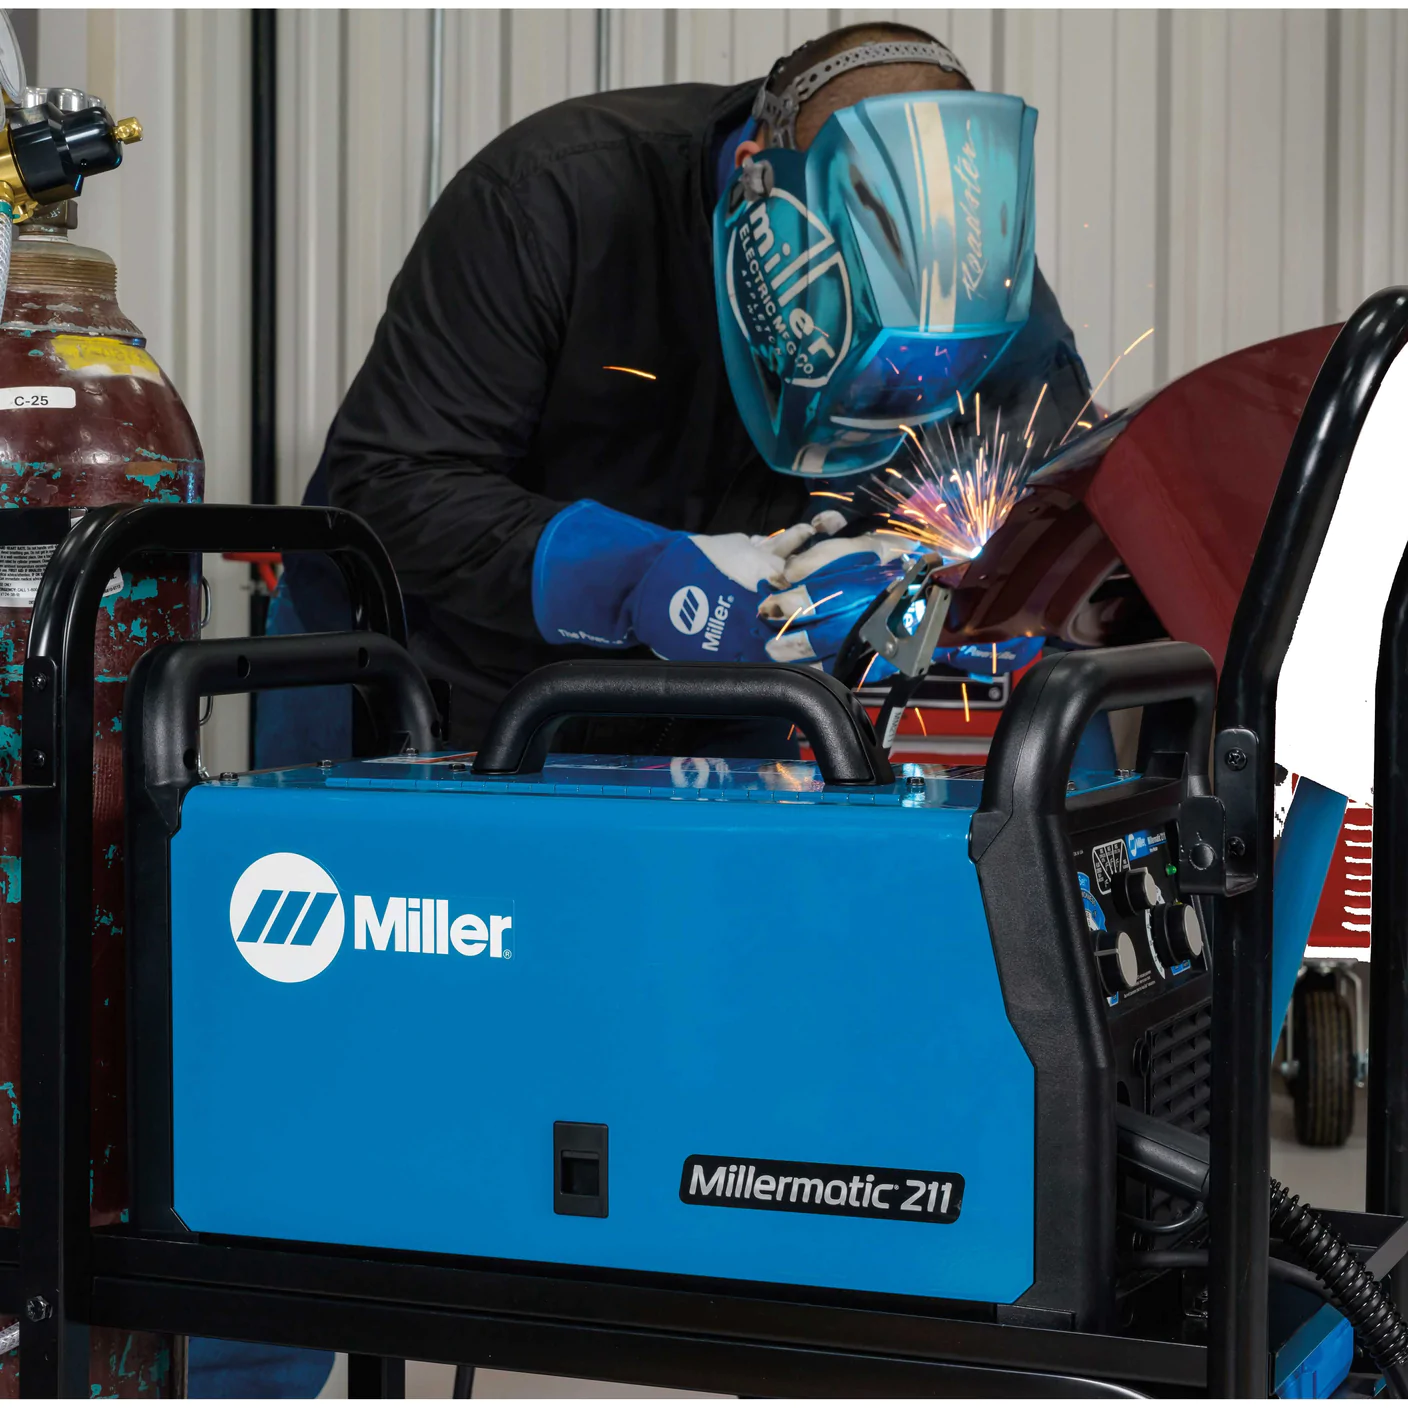 Millermatic 211 Mig welding application